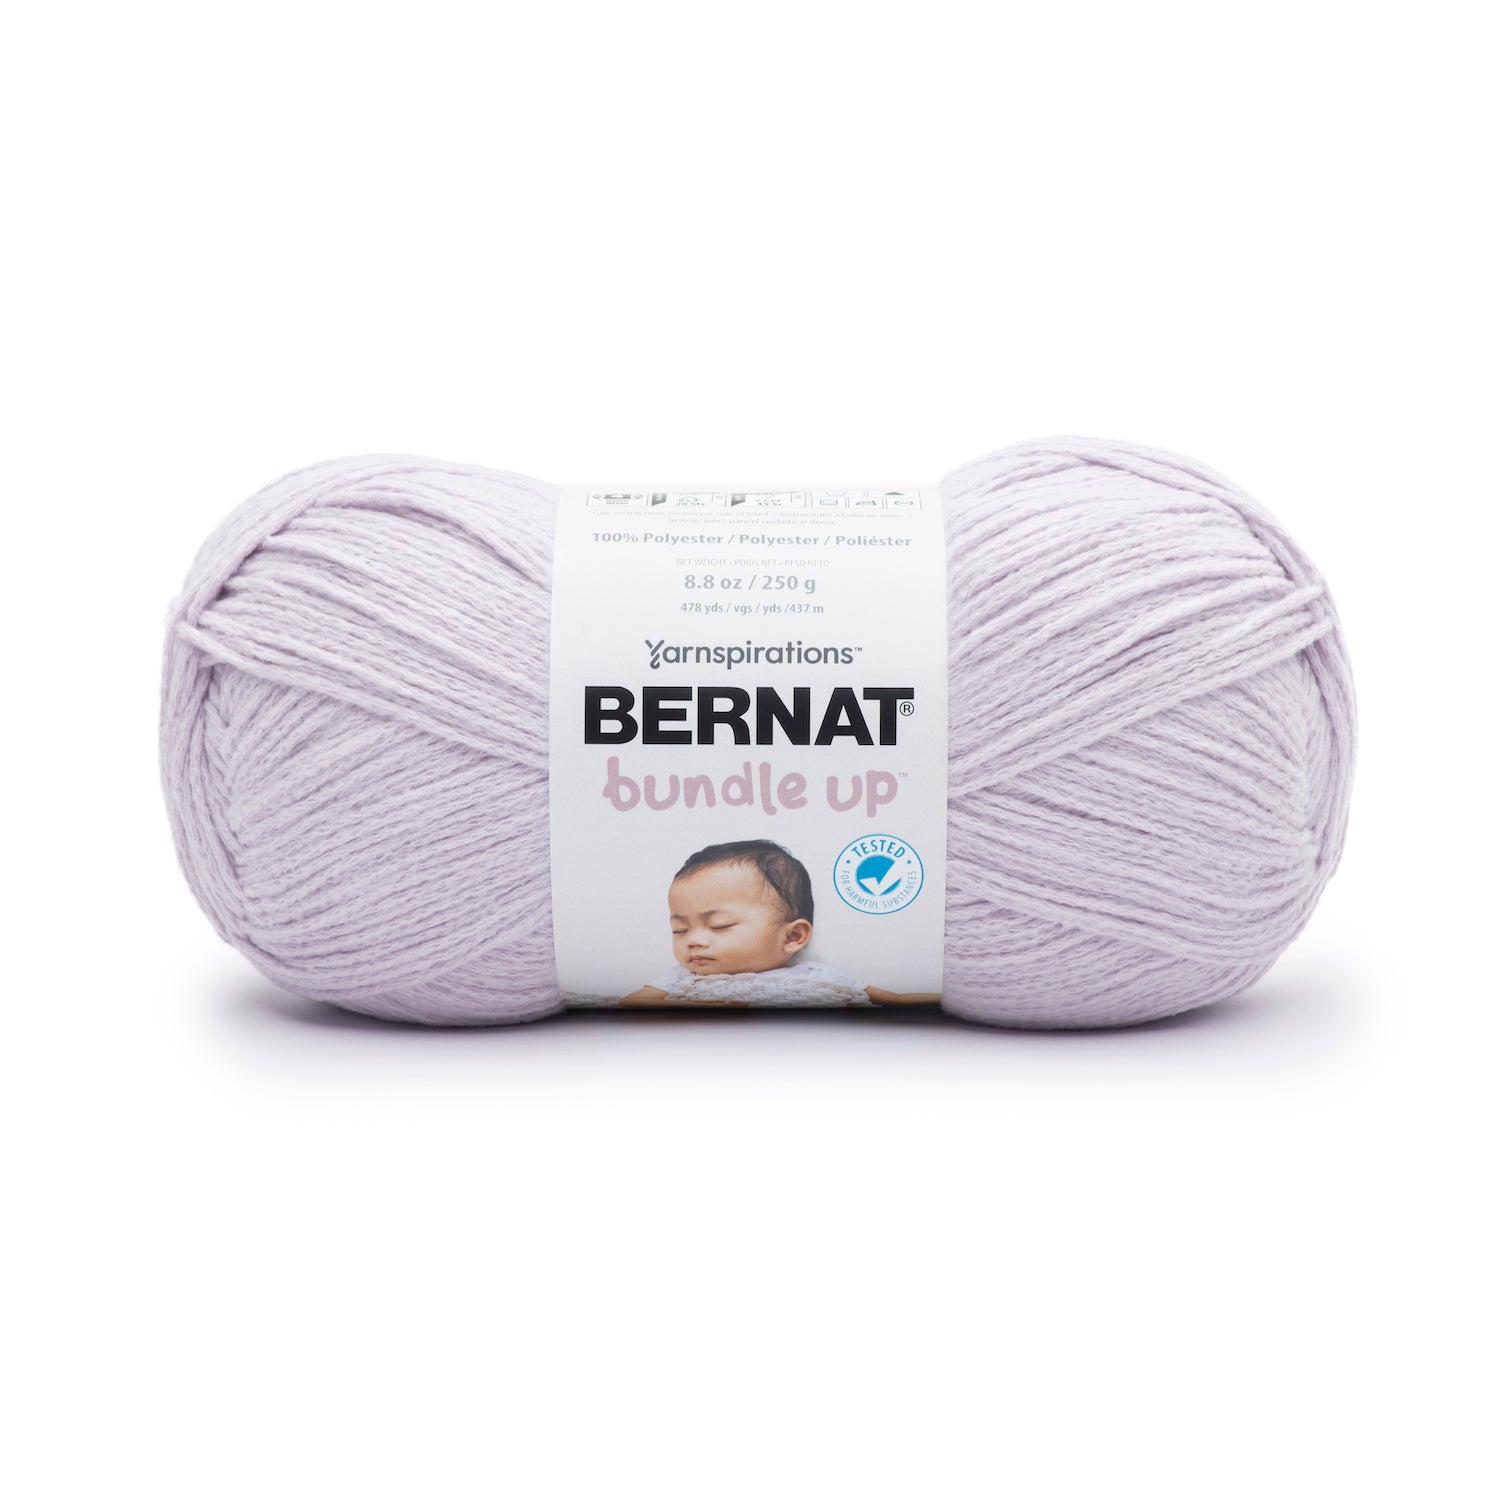 Bernat Bundle Up Yarn (250g/8.8oz) - Discontinued shades